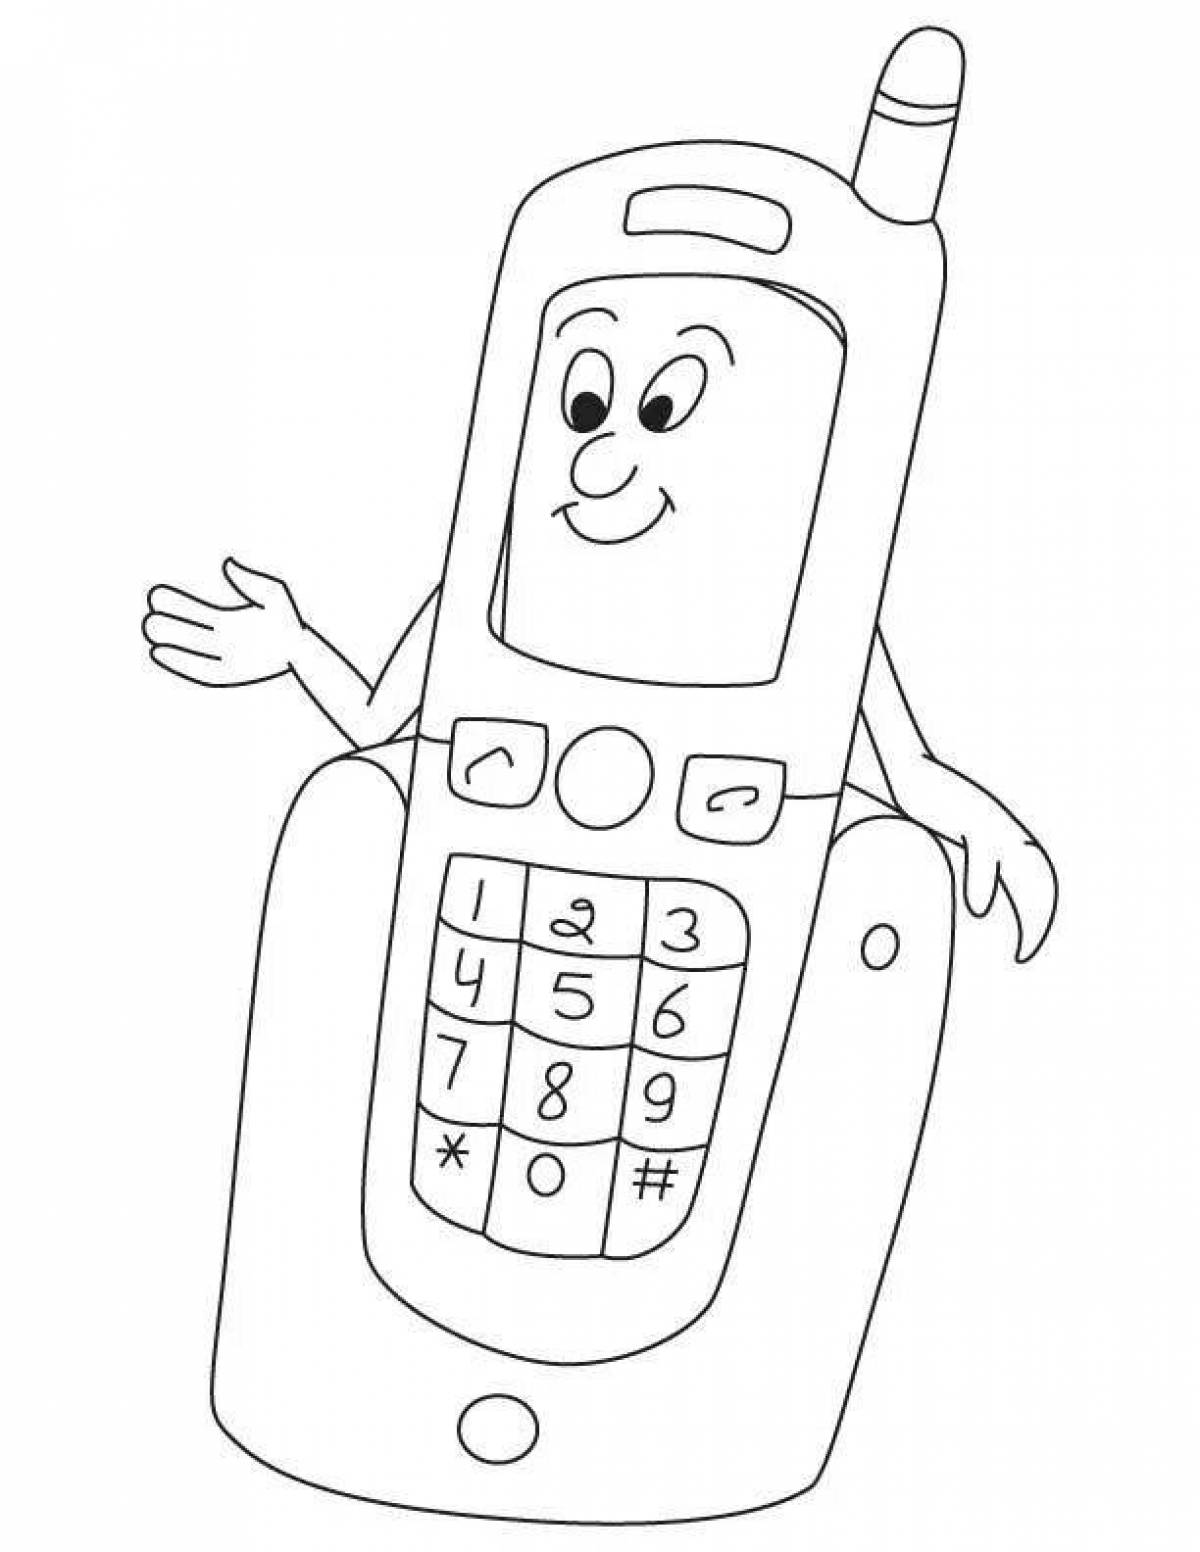 Cell phone for children #3